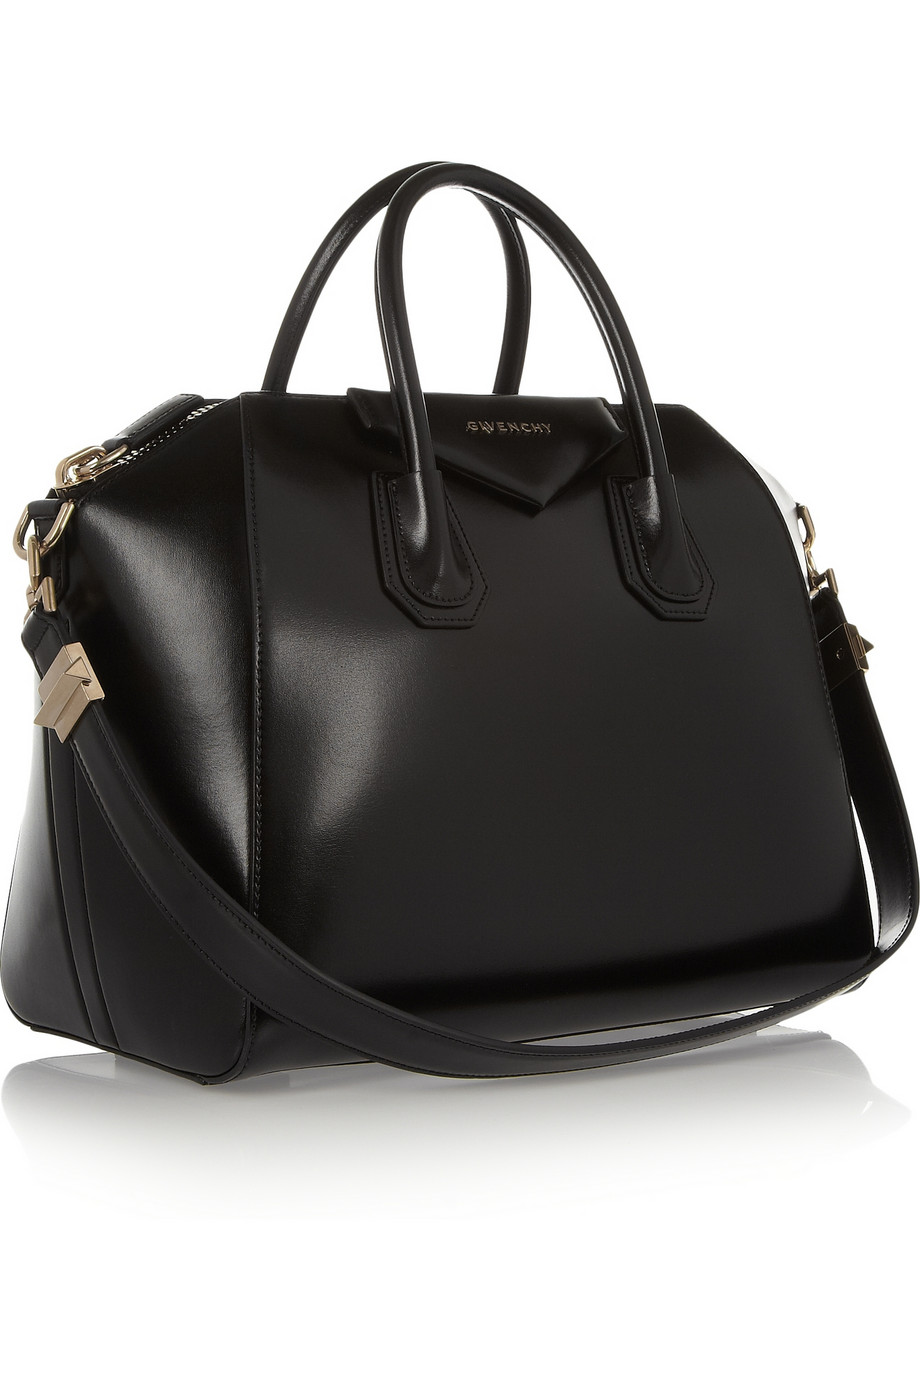 Givenchy Medium Antigona Bag in Shiny Black Leather - Lyst